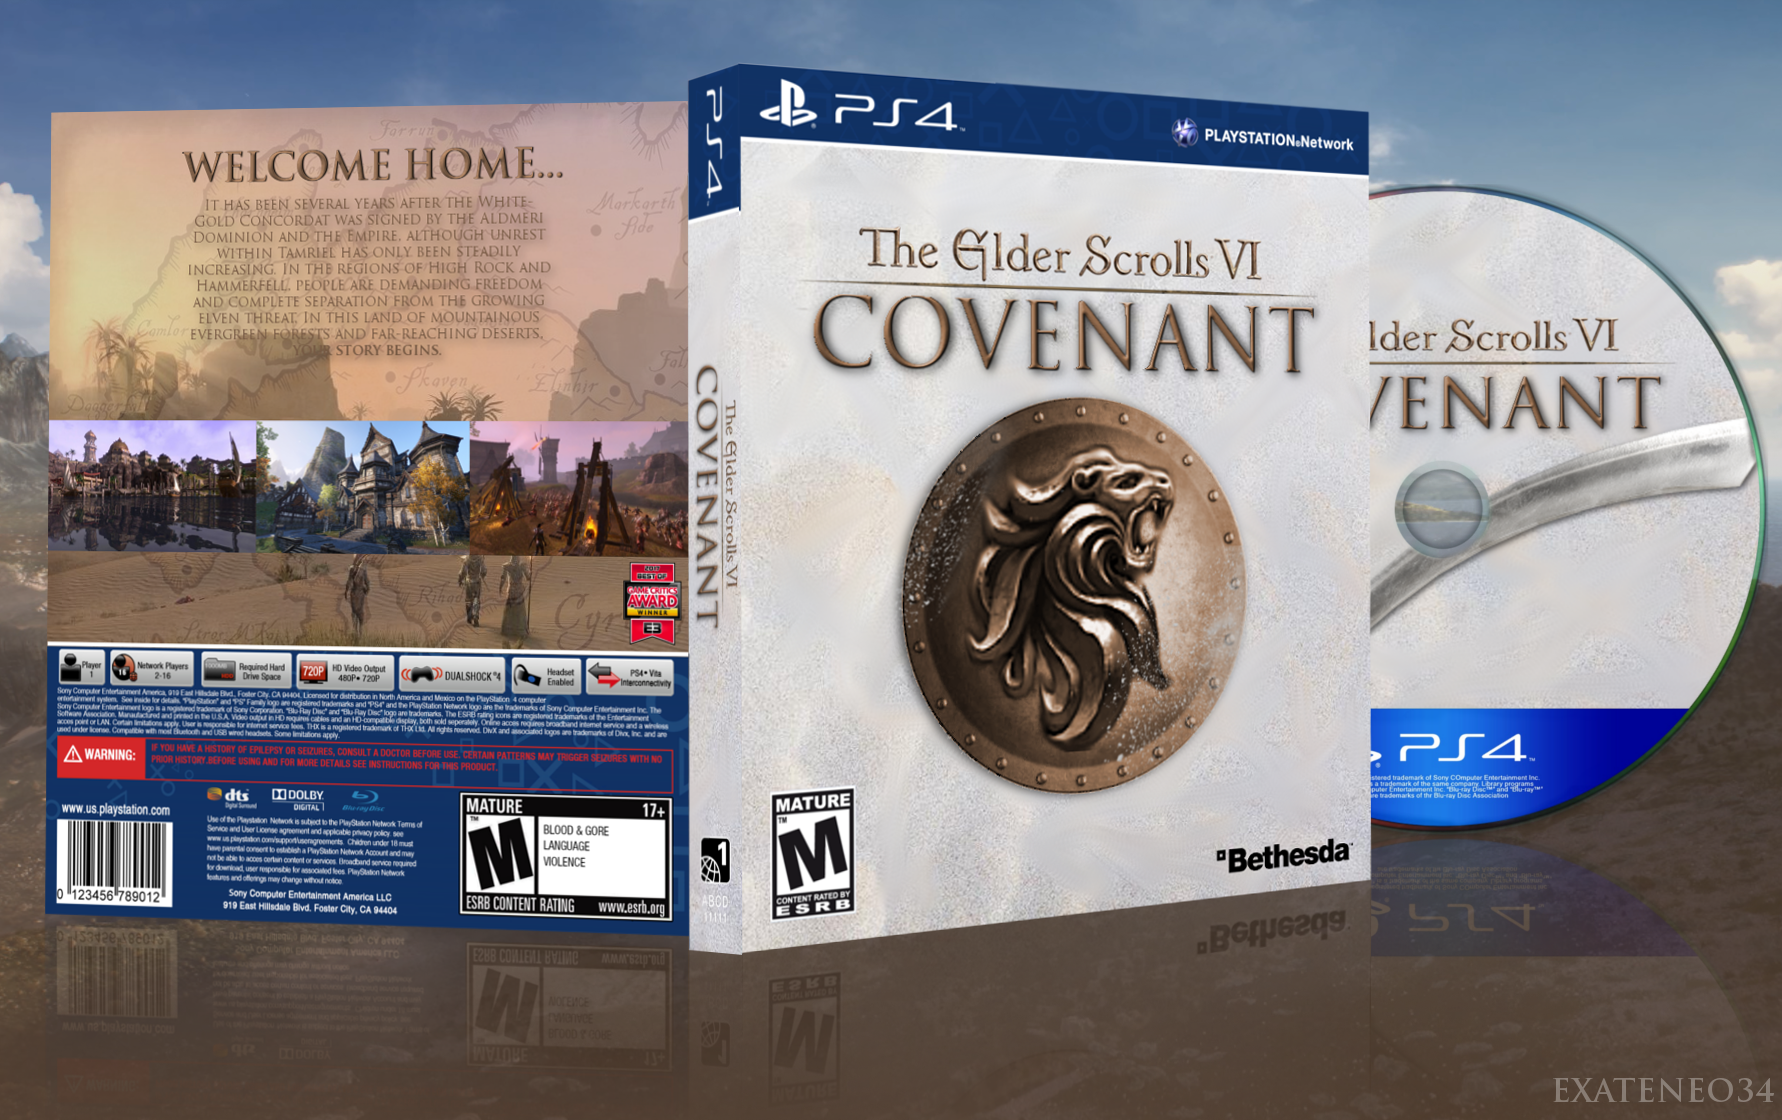 The Elder Scrolls VI: Covenant box cover